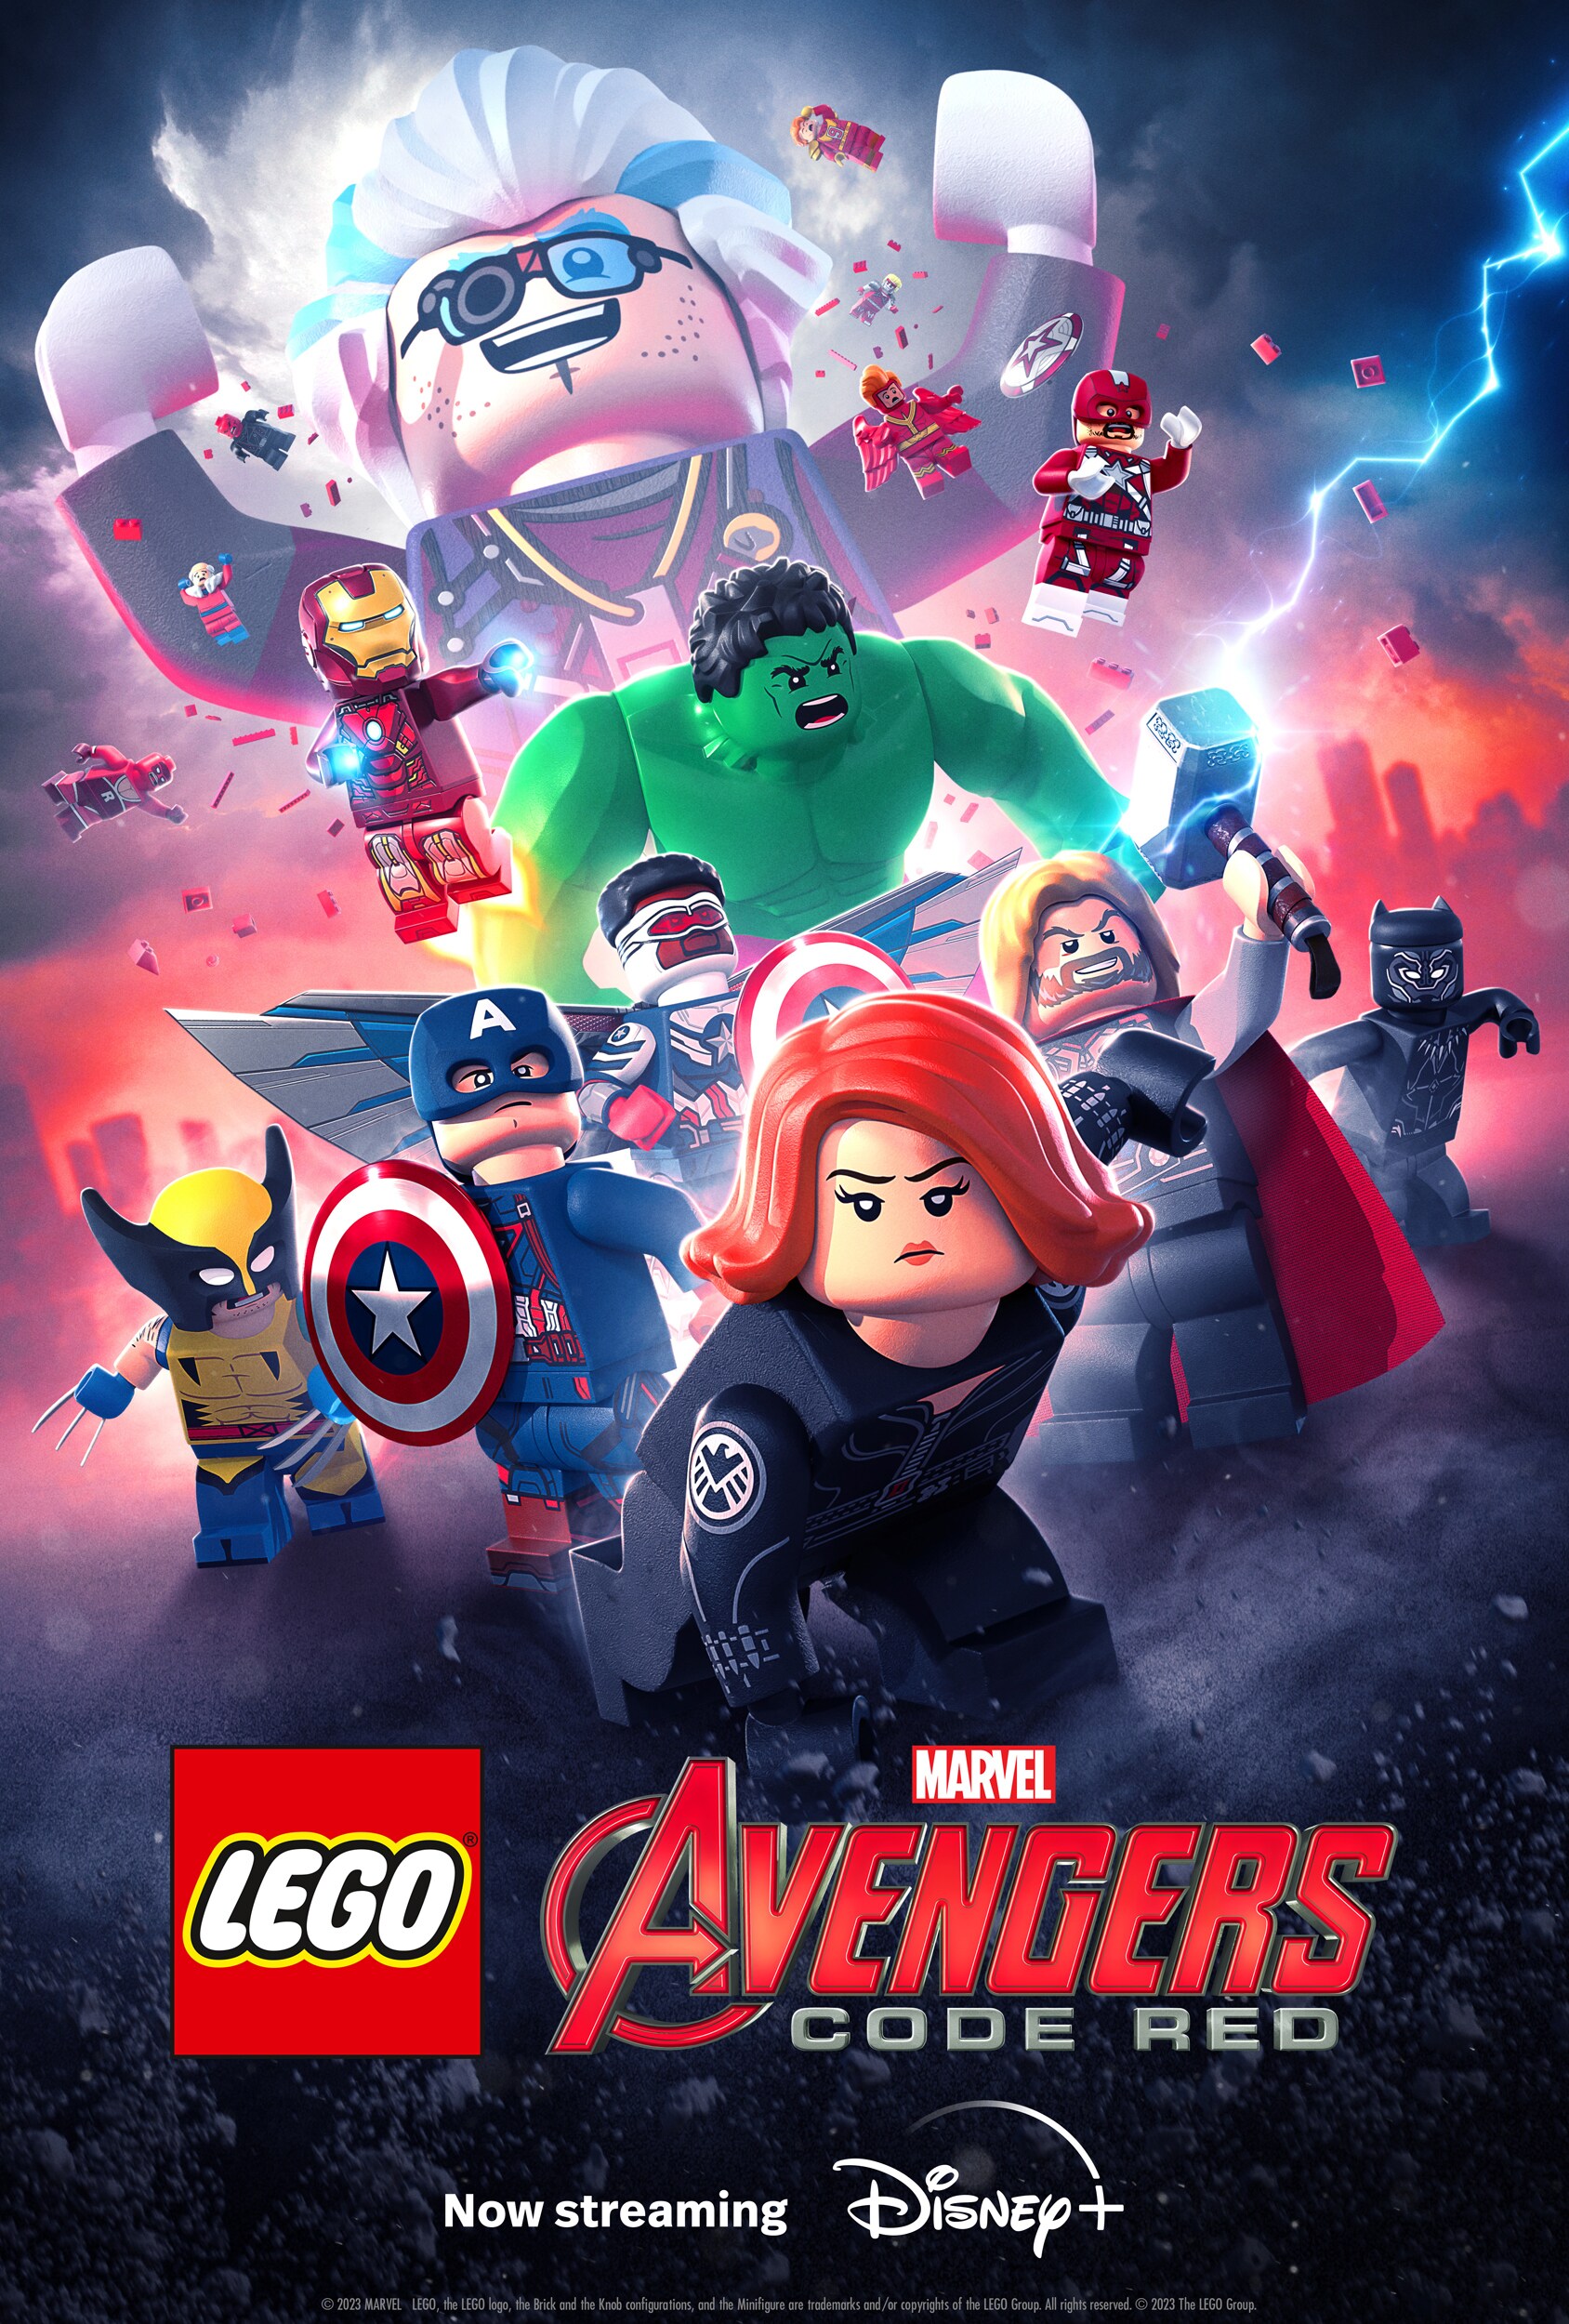 Marvel Studios’ “LEGO® Marvel Avengers Code Red” Now Streaming Exclusively On Disney+ Disney